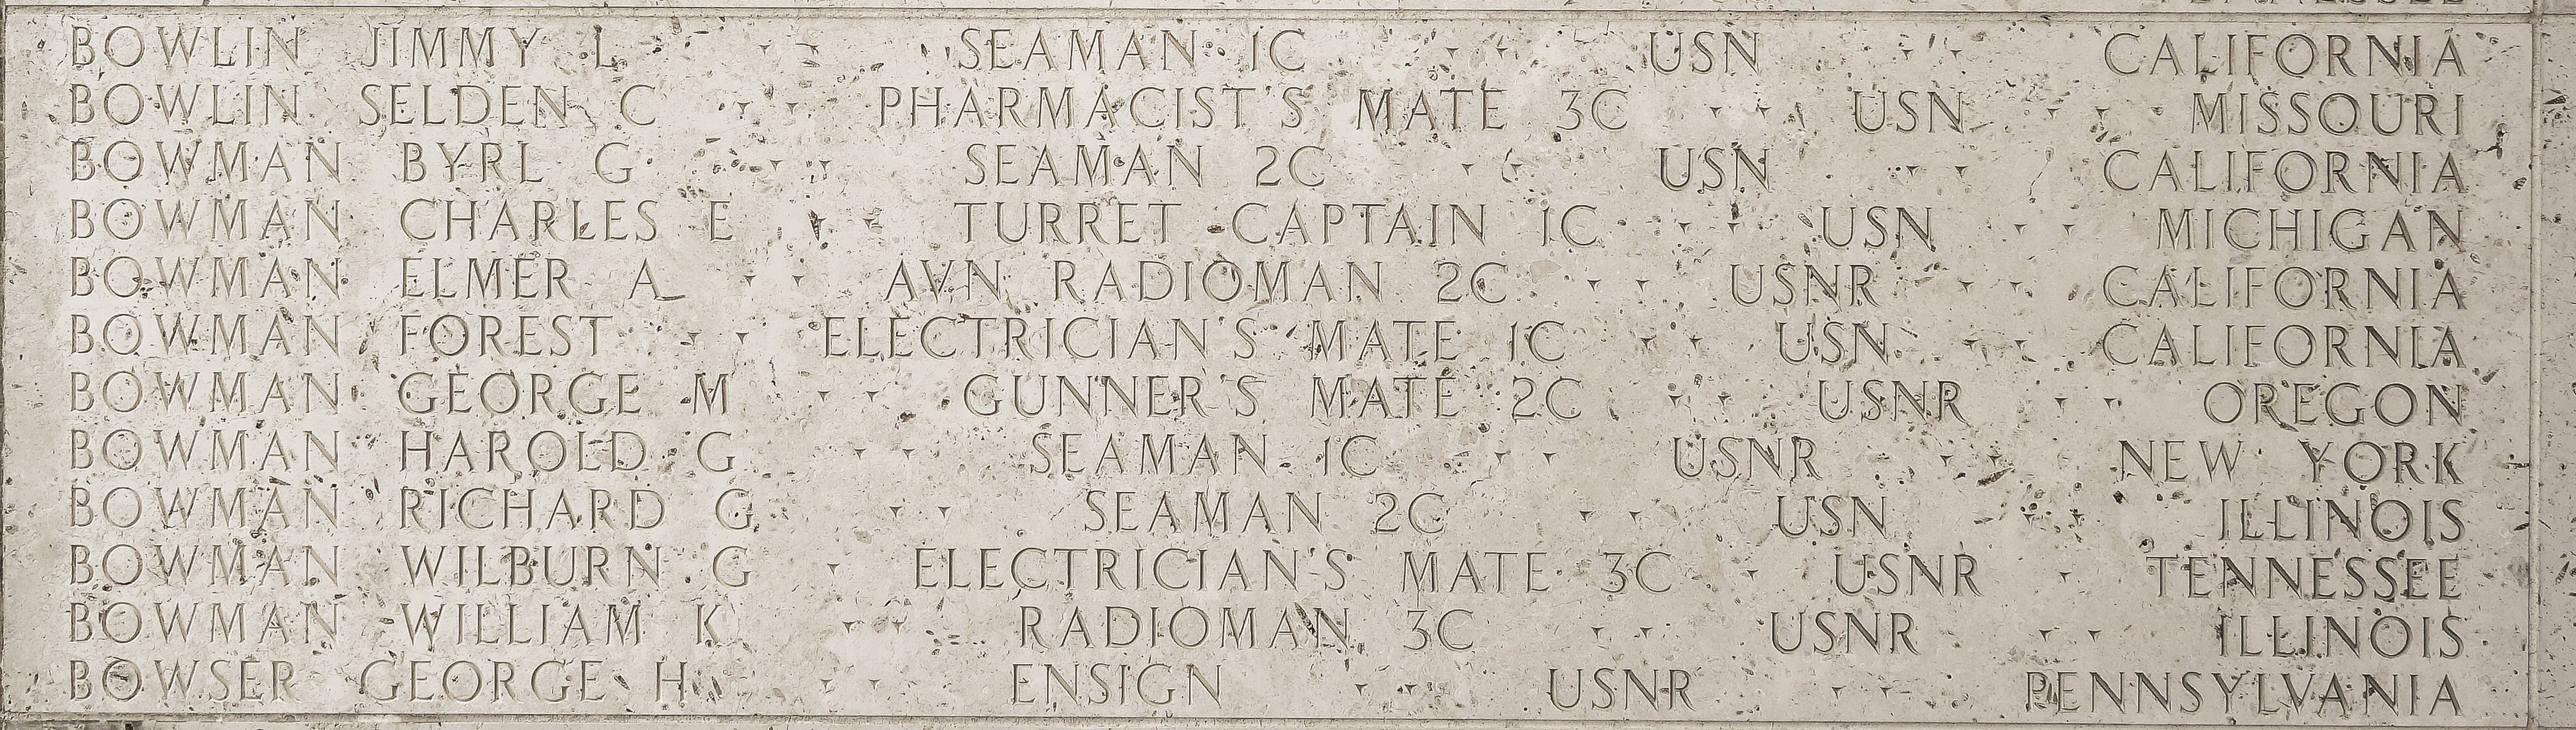 Elmer A. Bowman, Aviation Radioman Second Class